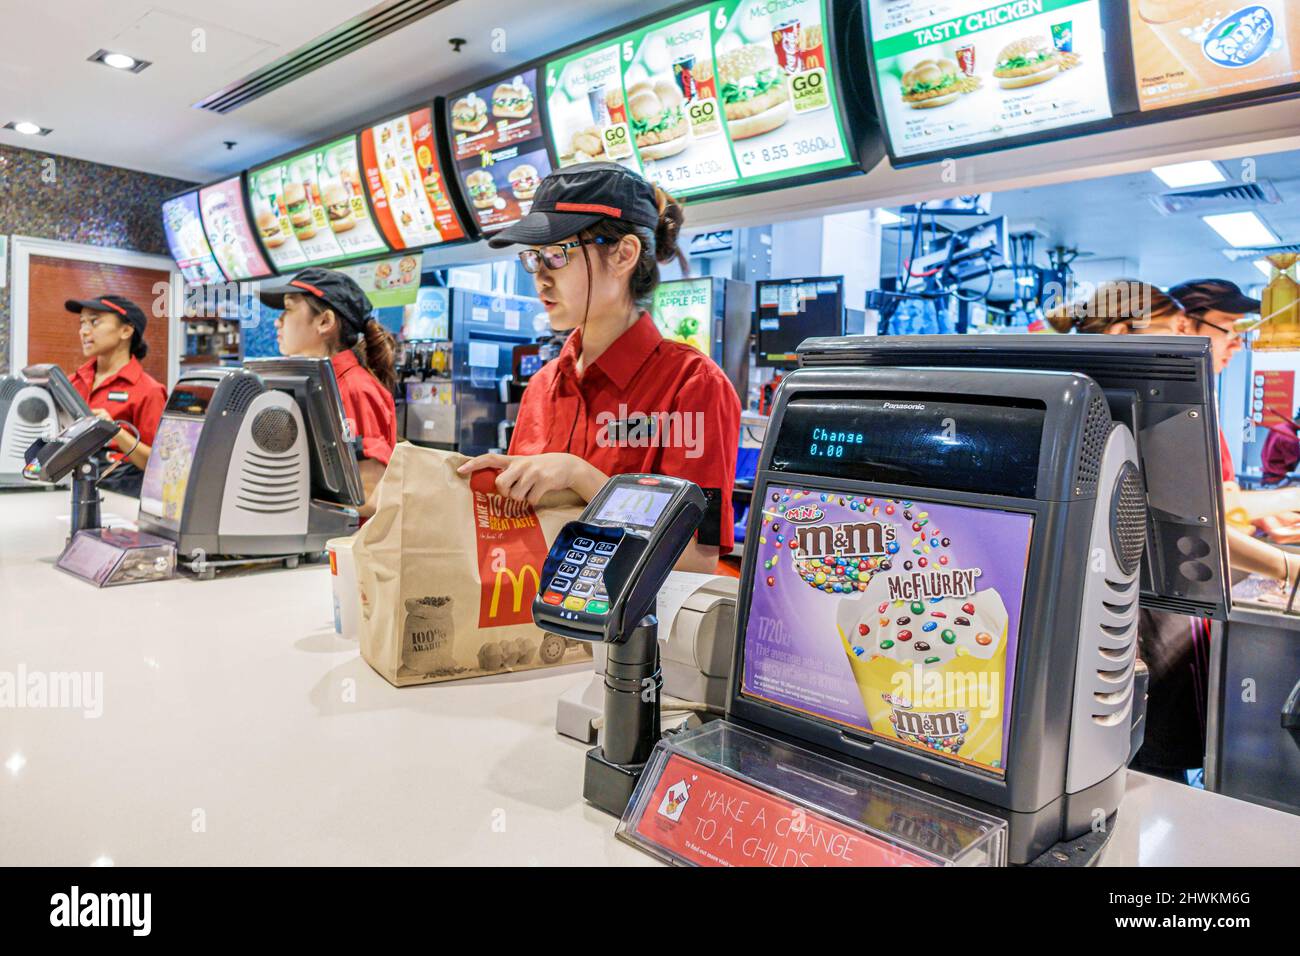 Sydney Australie, Circular Quay McDonald's, restaurant fast food counter Asian woman, working uniforme employee worker m&M. Banque D'Images